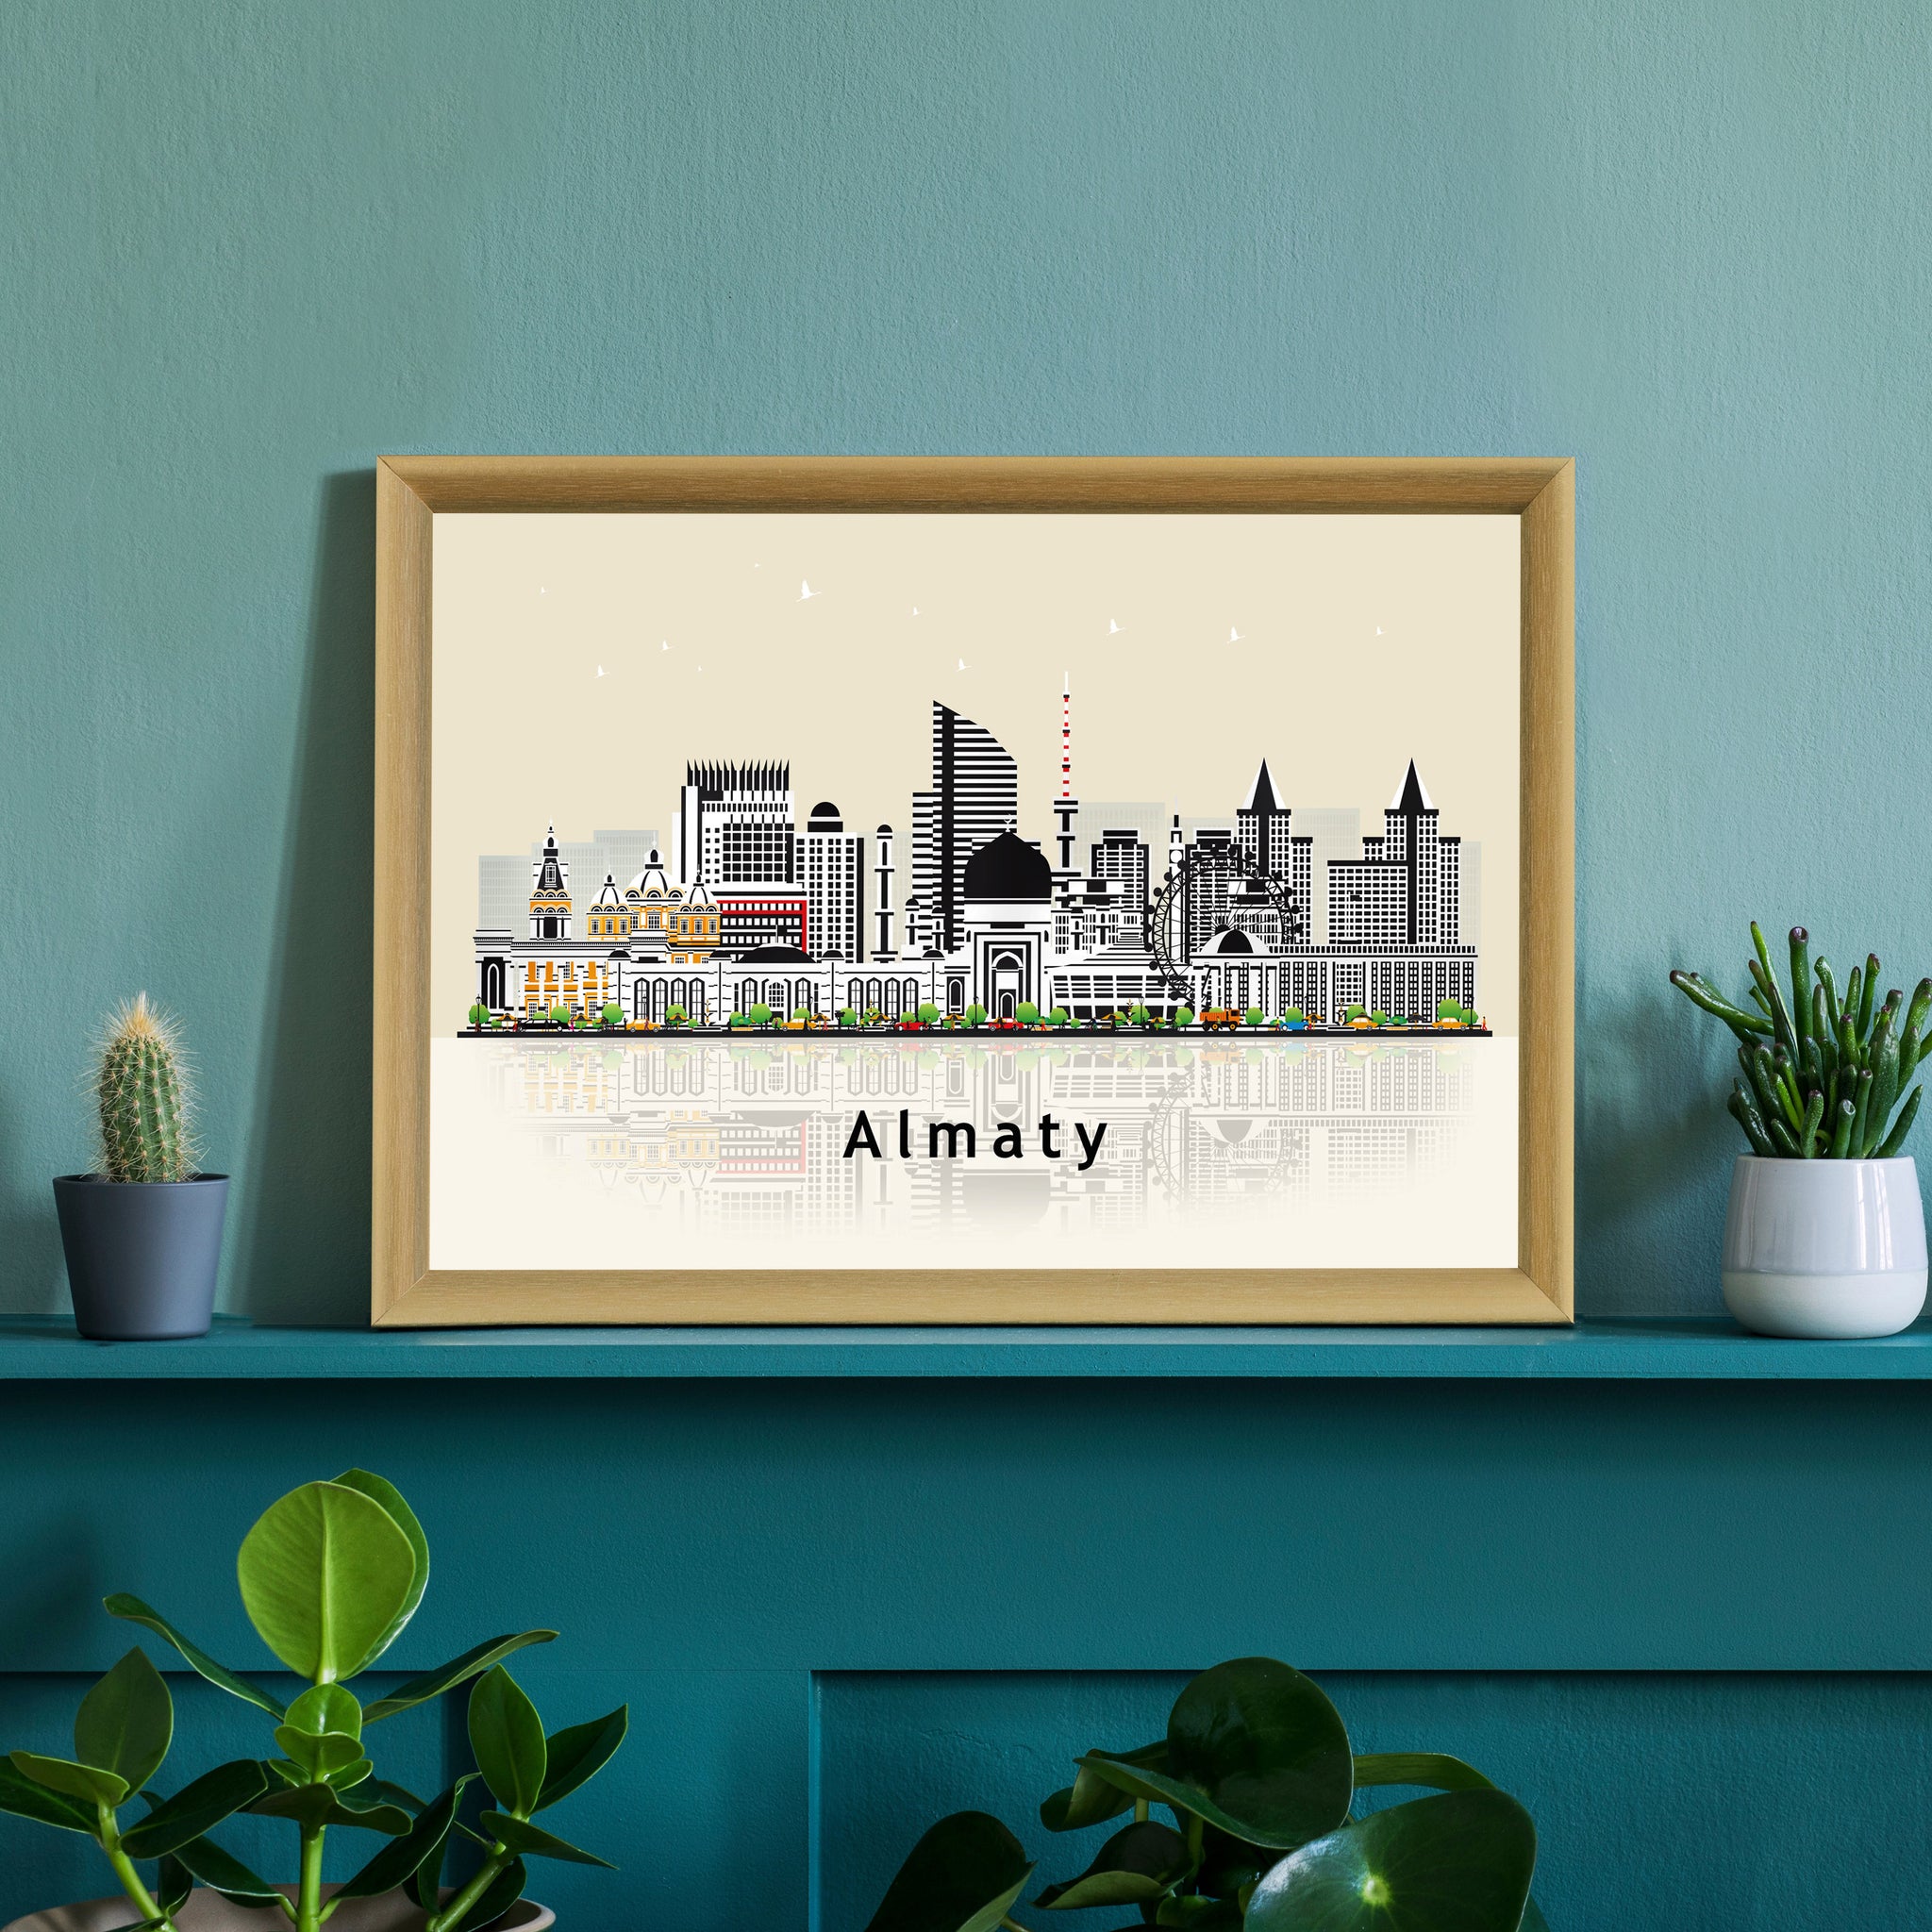 ALMATY KAZAKHSTAN  Illustration skyline poster, Modern skyline cityscape poster print, Almaty landmark map poster, Home wall art decoration